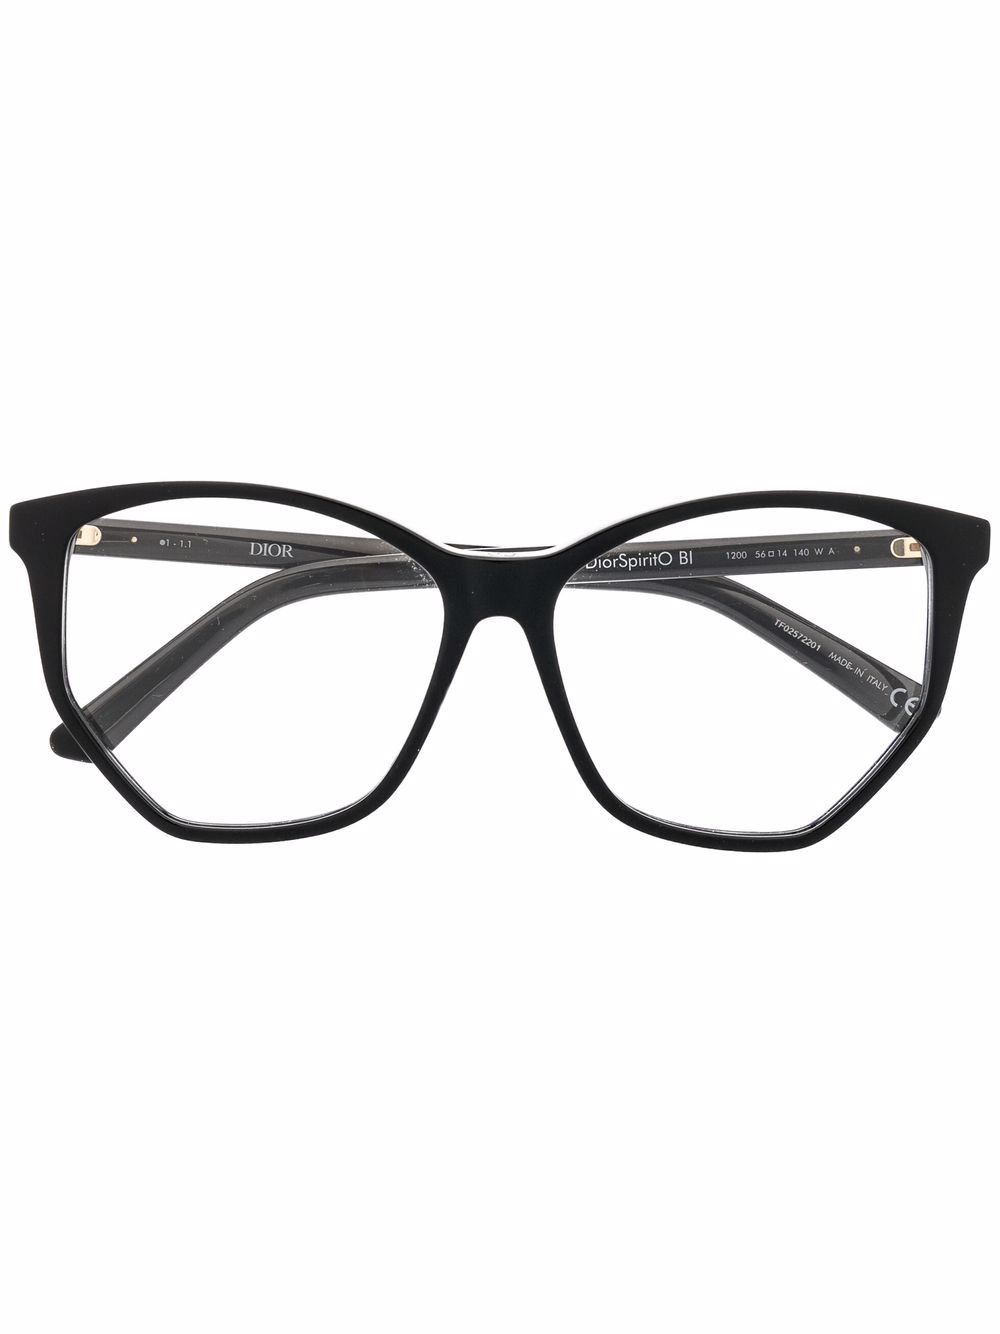 фото Dior eyewear очки spirit в оправе 'кошачий глаз'